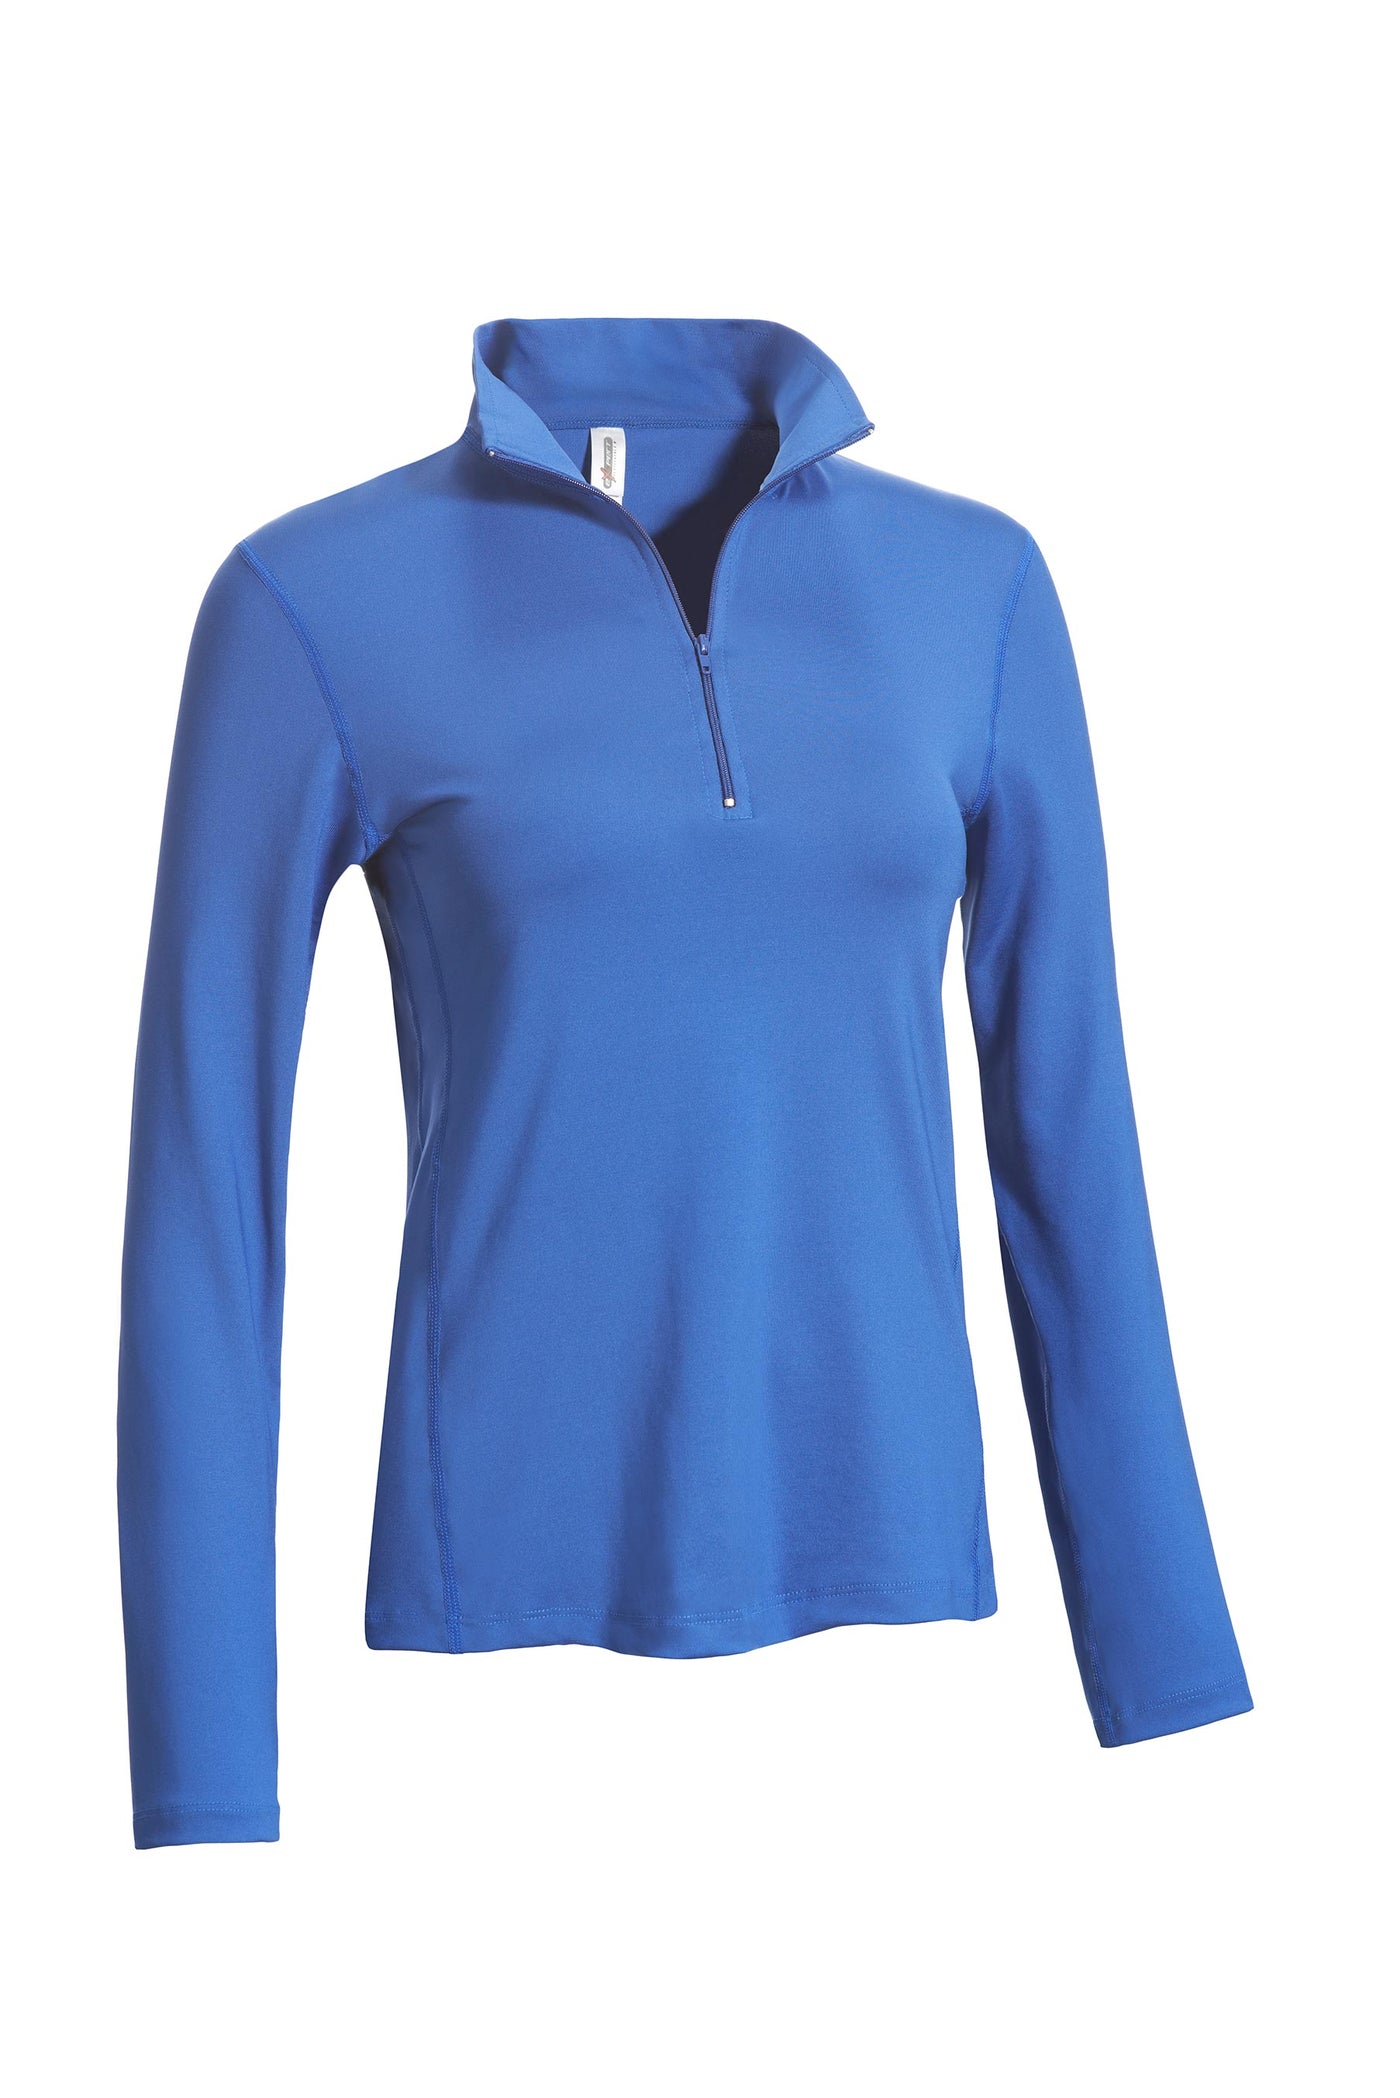 Expert Apparel Women's Quarter Zip Training Pullover Top cadet blue#color_cadet-blue